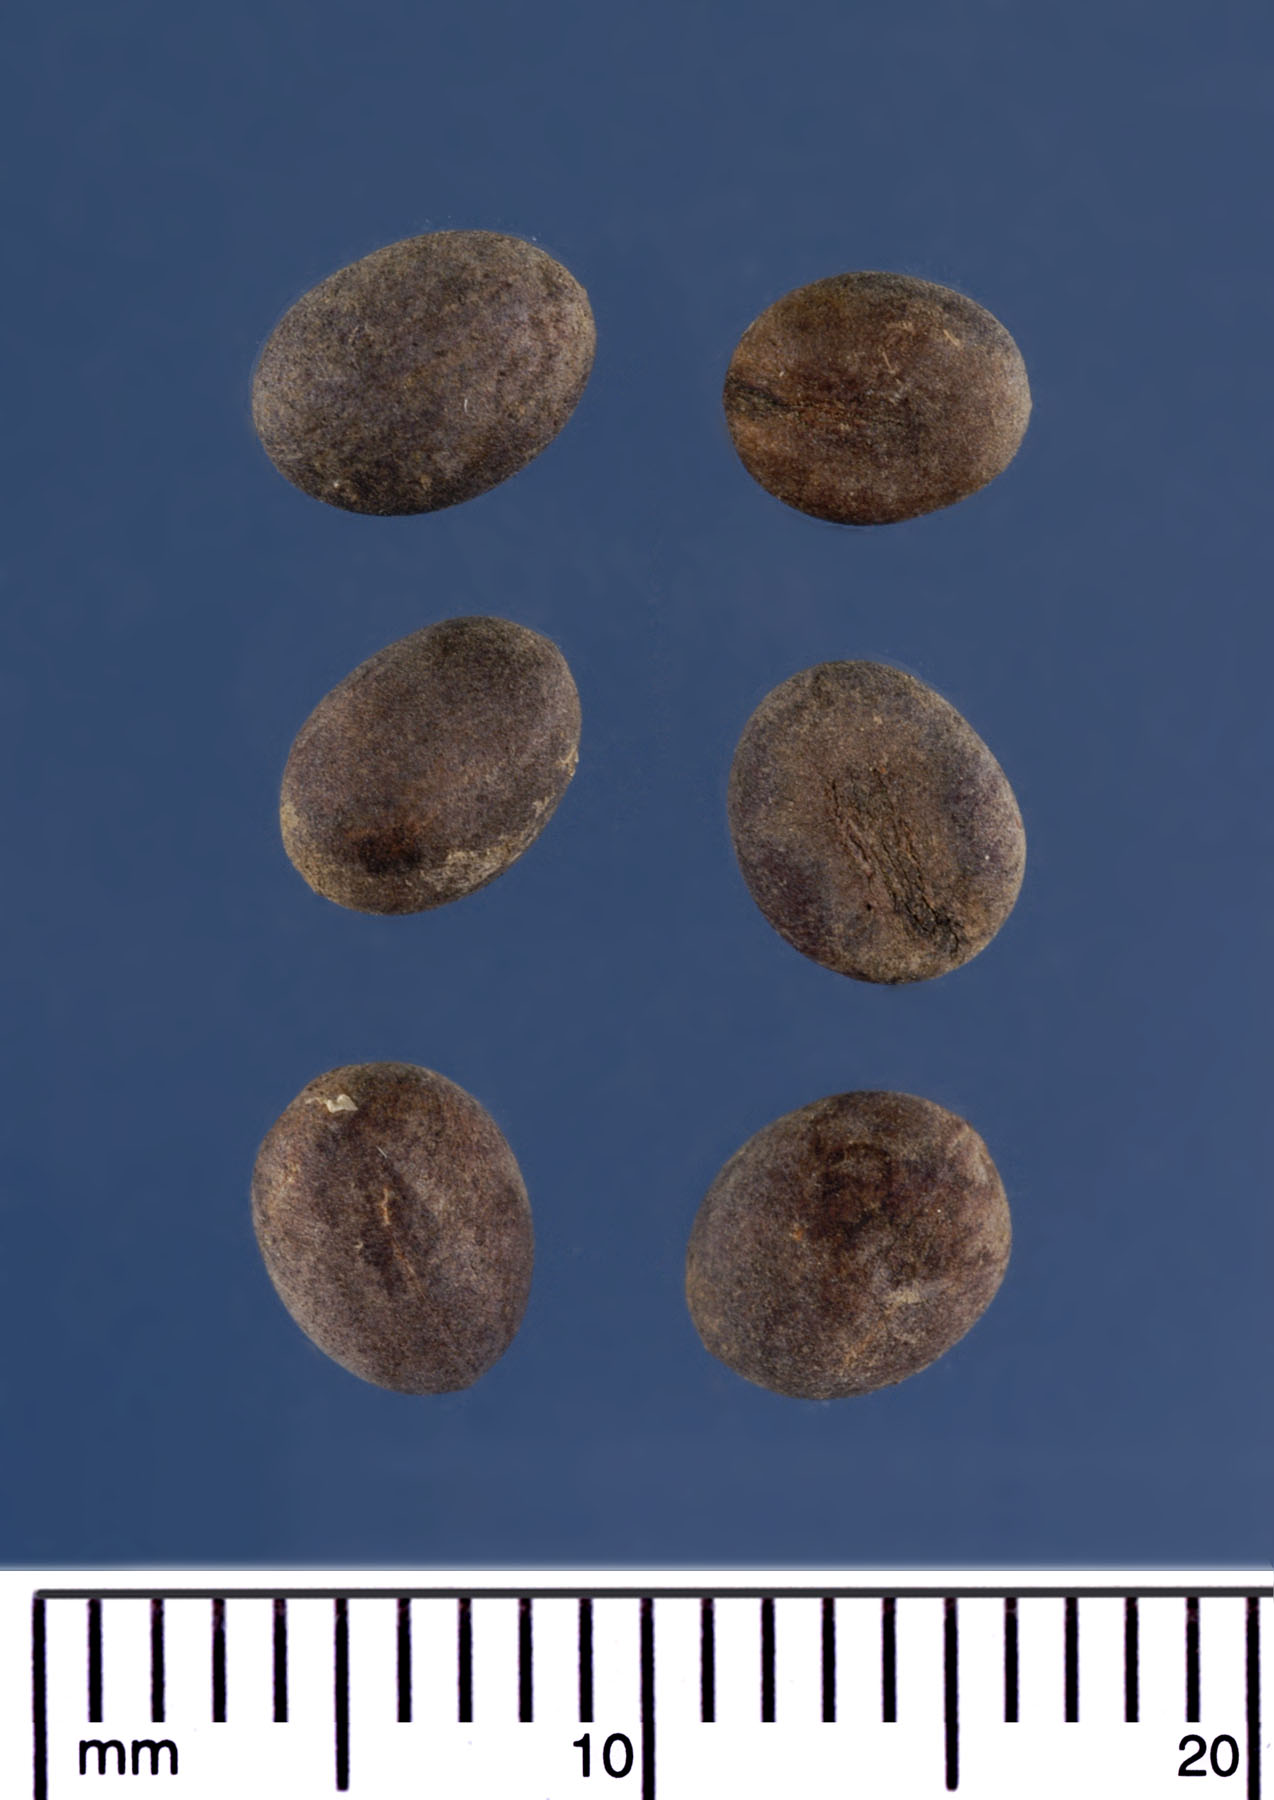   Washingtonia filifera  seeds (mm scale). Photograph courtesy of Mariana P. Beckman, DPI 